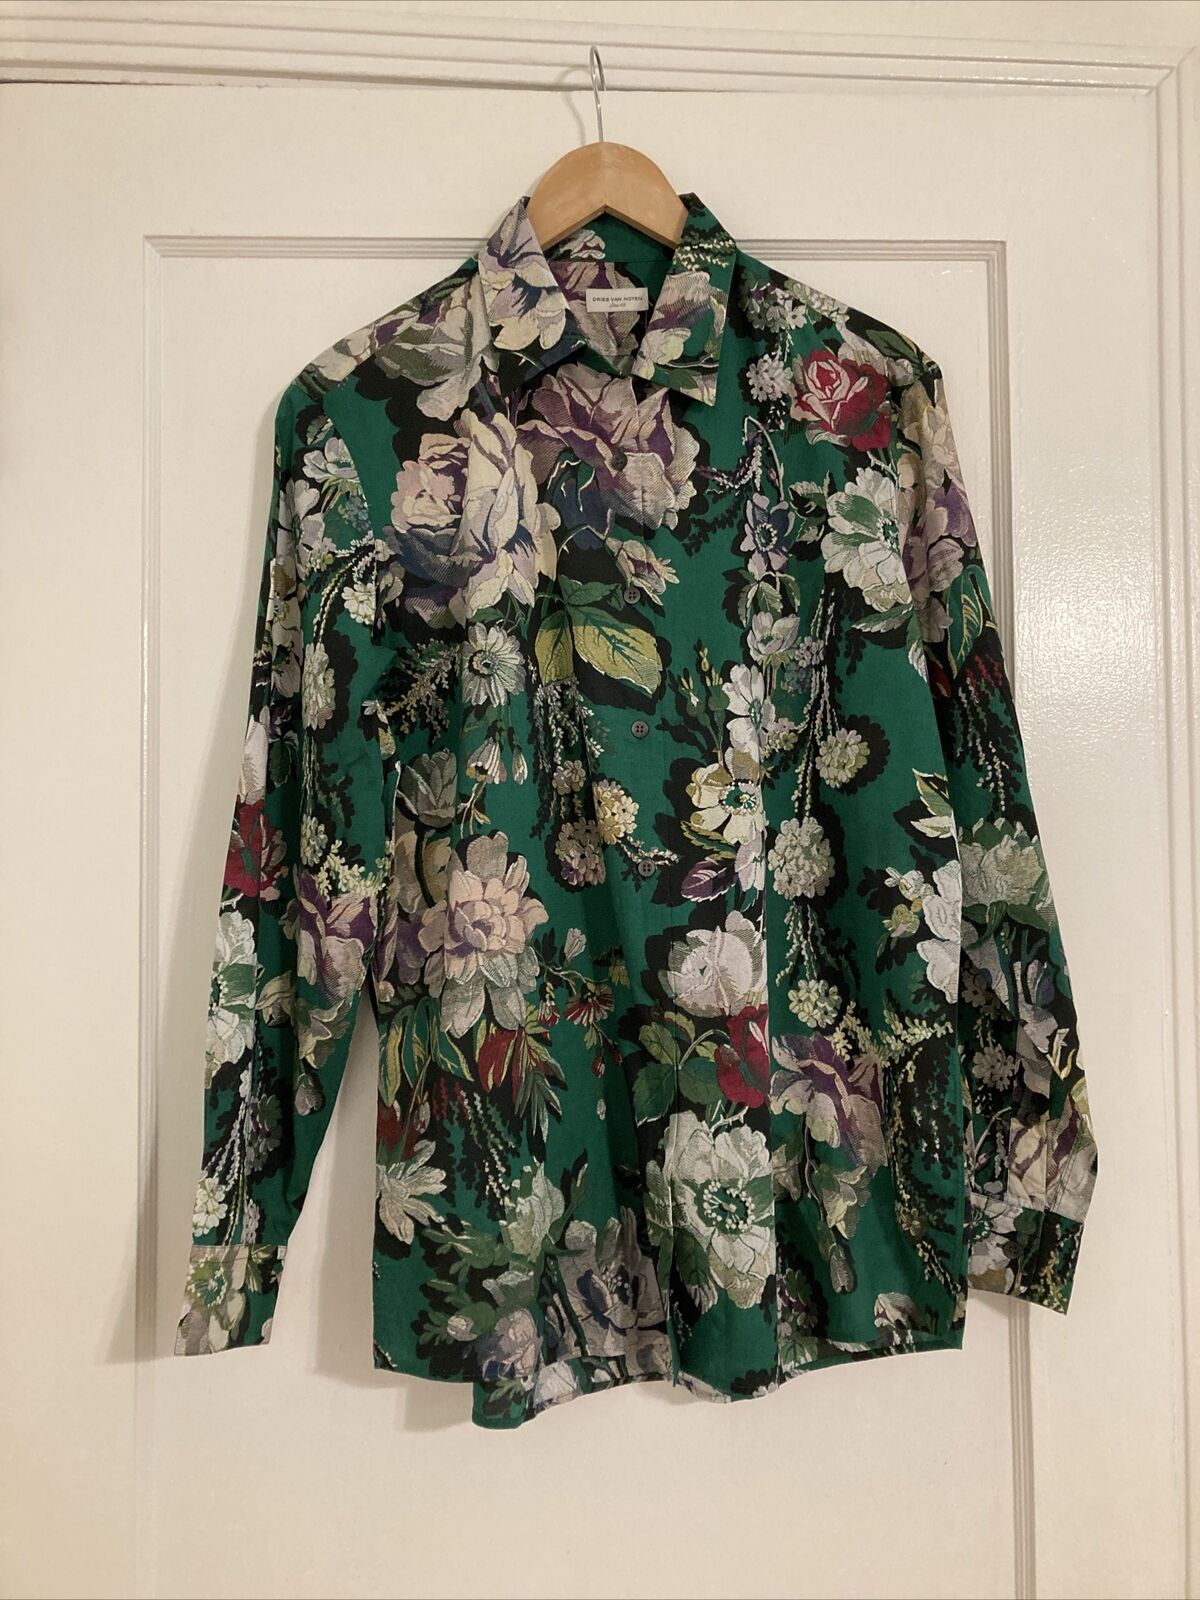 Dries Van Noten Women’s Cotton Floral Print Button Down Dress Shirt Size 42